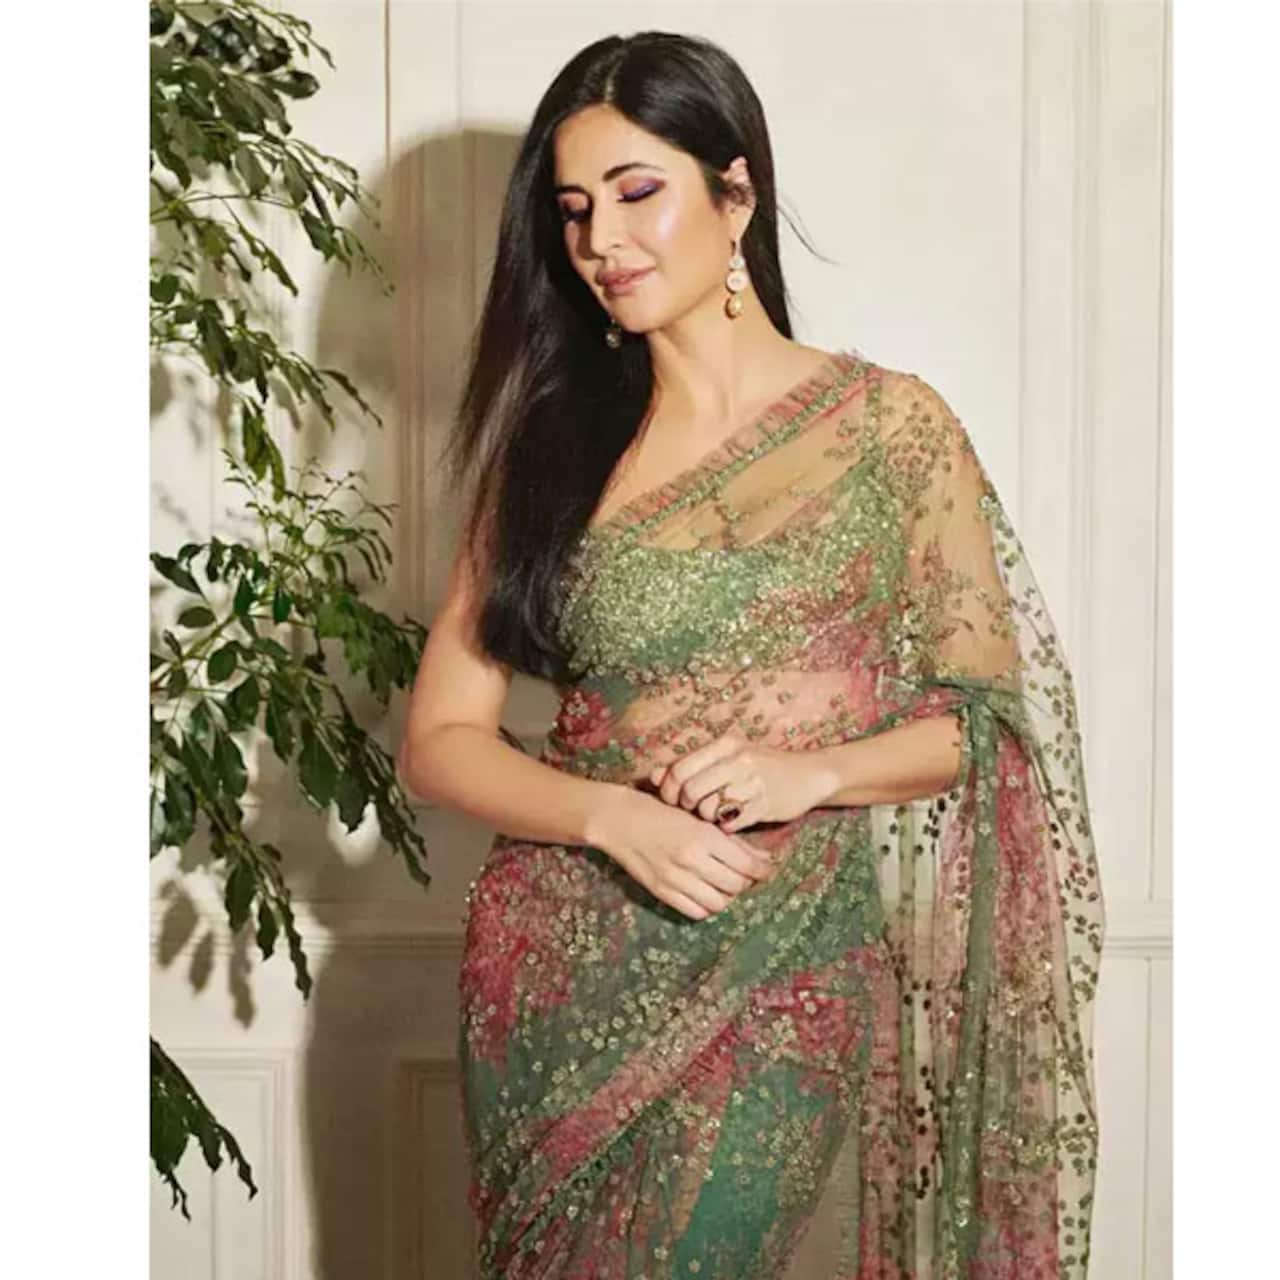 Katrina Kaif looks ravishing in green netted saree